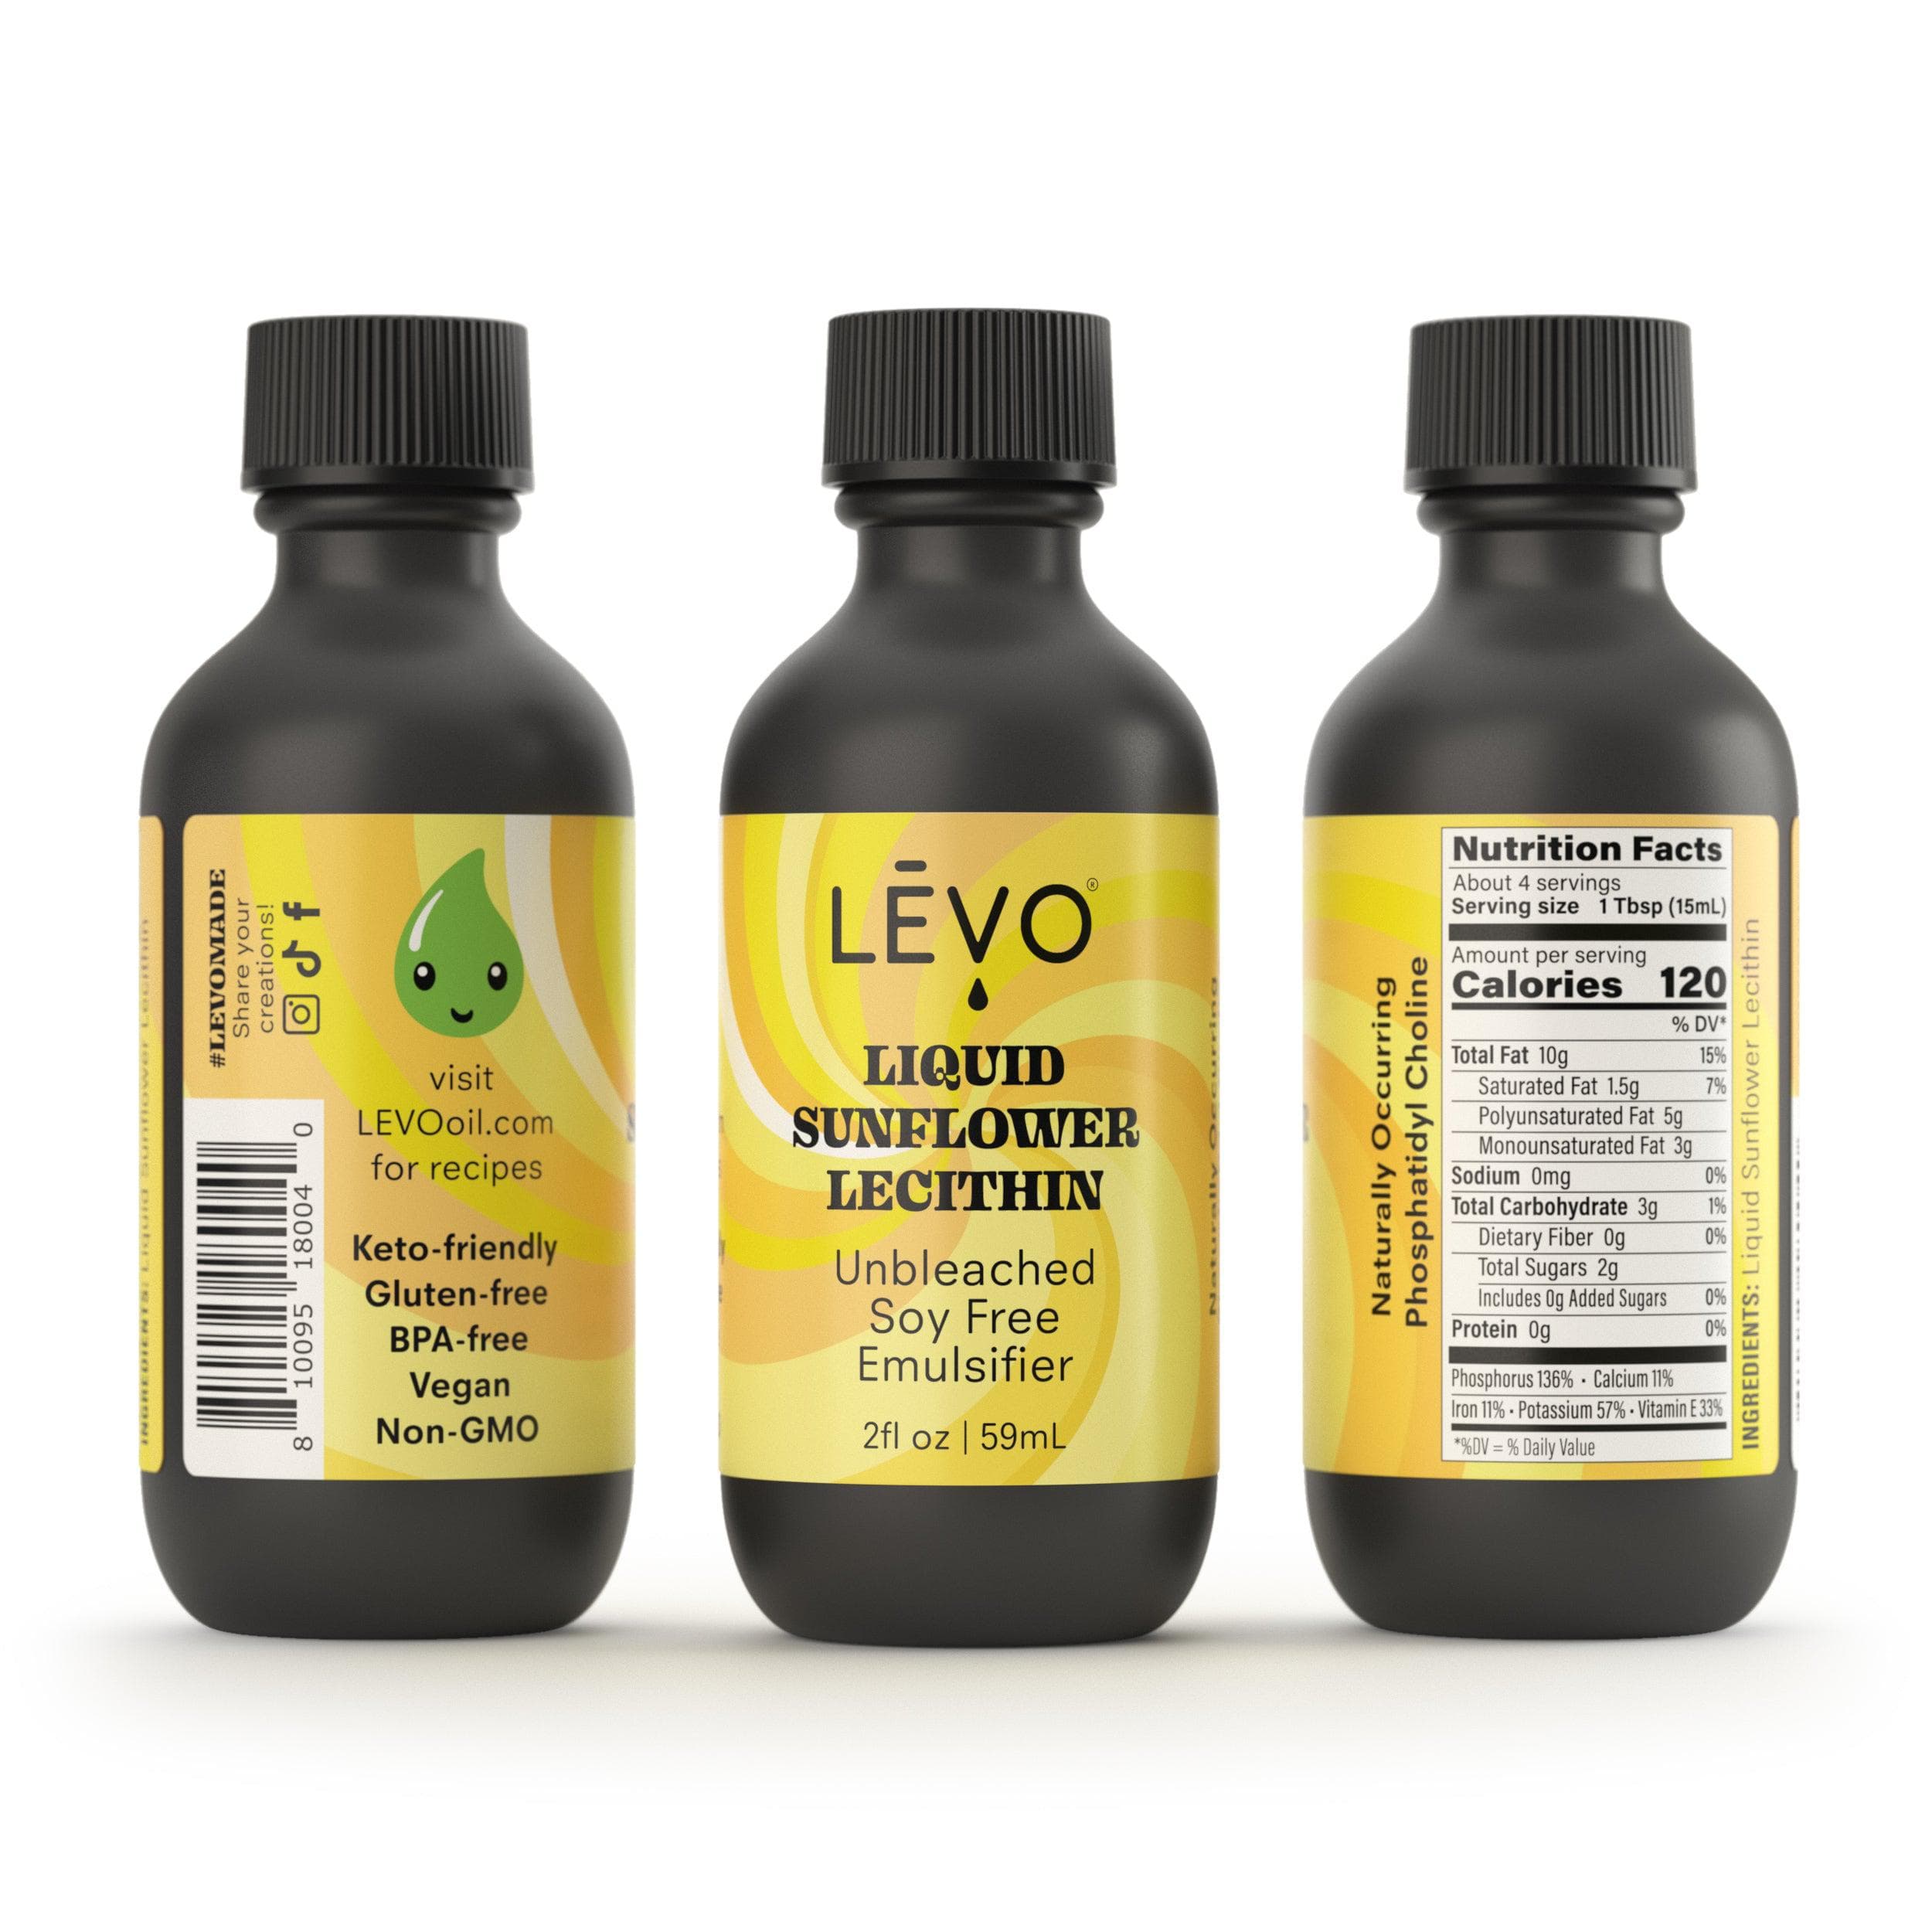 LEVO liquid sunflower lecithin nutrition facts